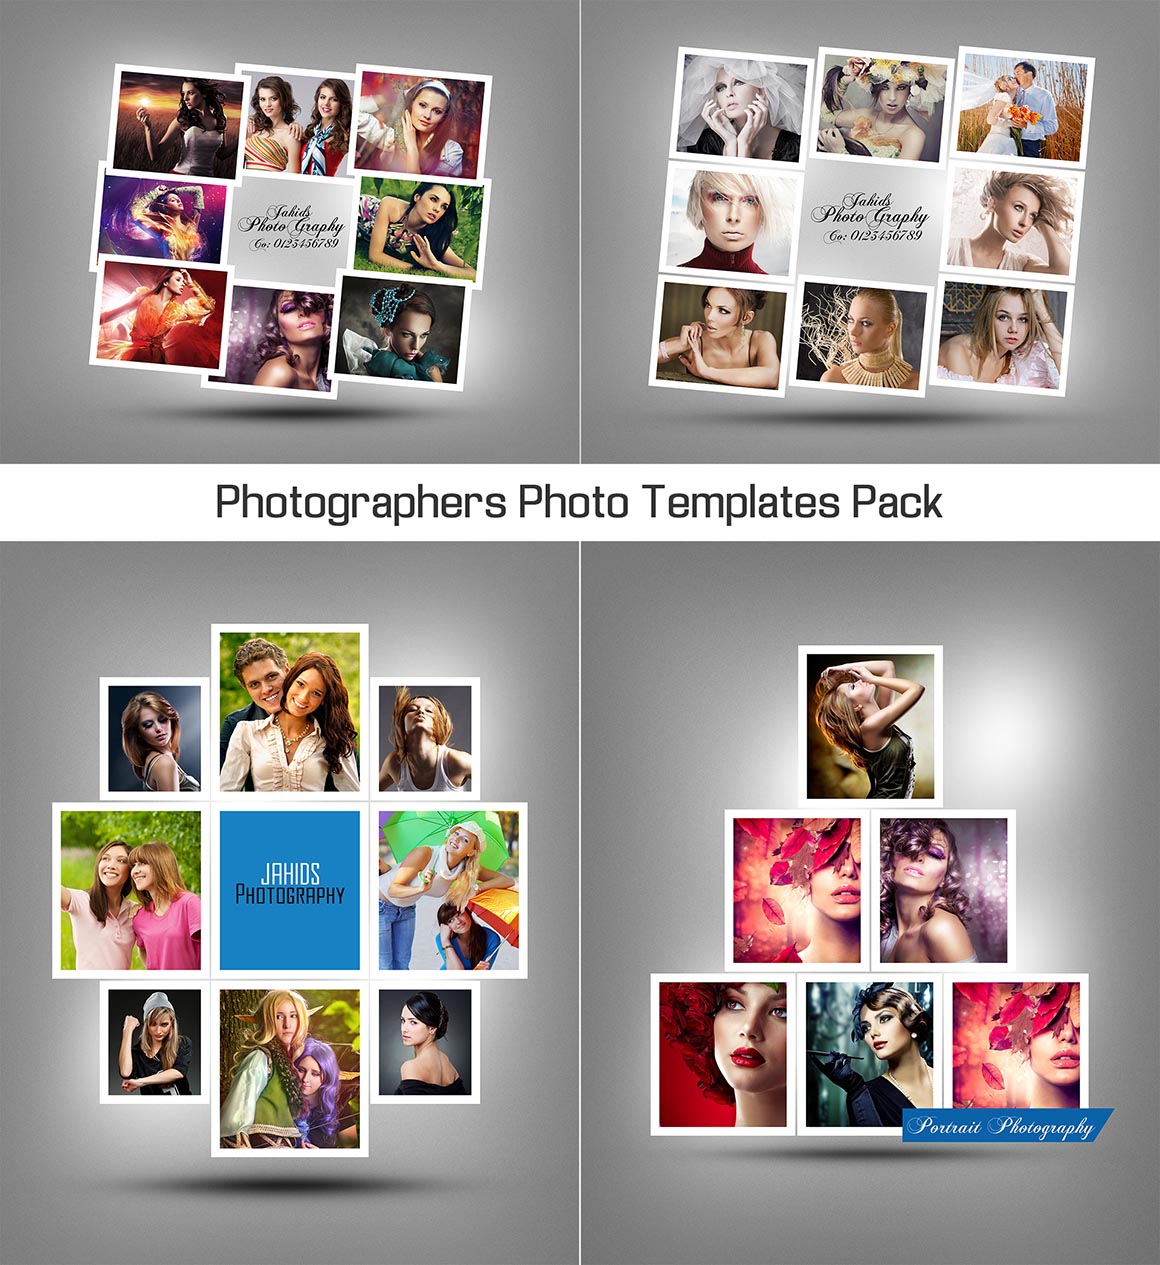 Photographers-Photo-Templates-Pack.jpg